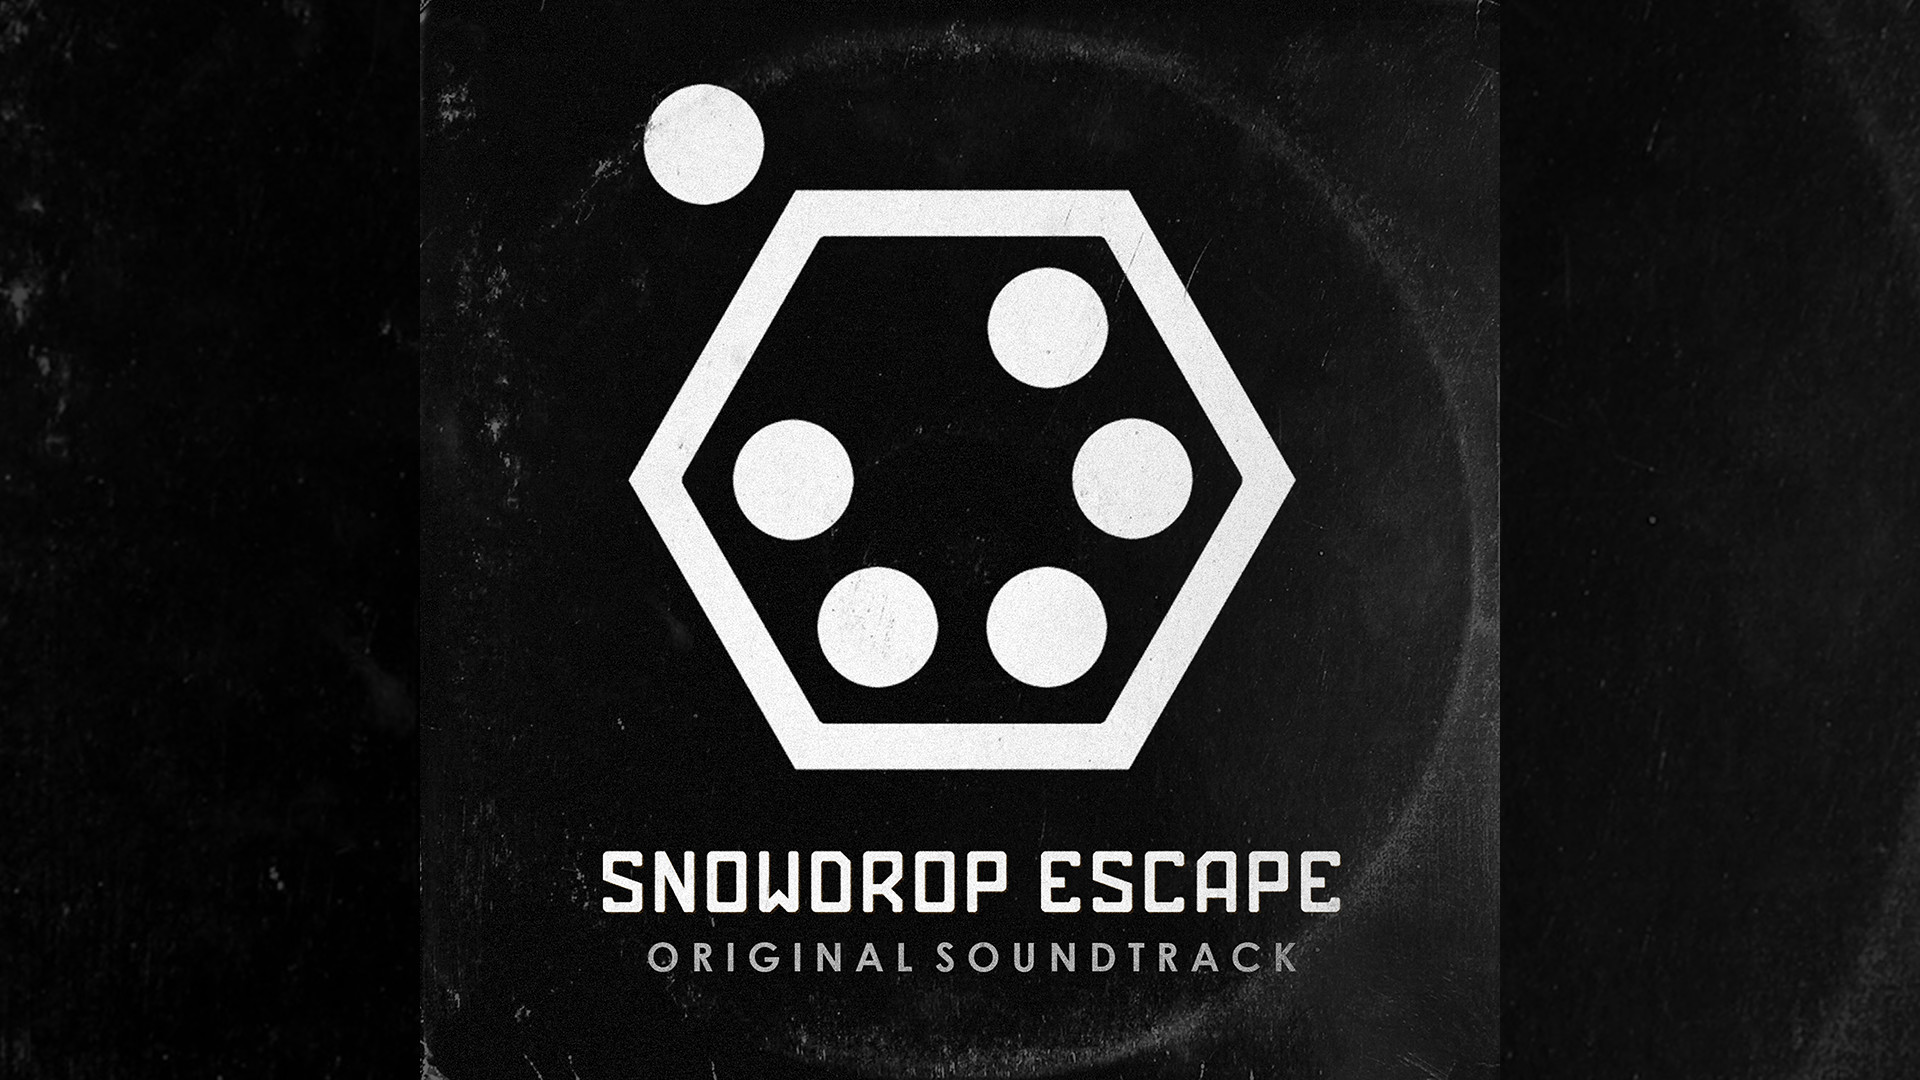 Snowdrop Escape Original Soundtrack Featured Screenshot #1